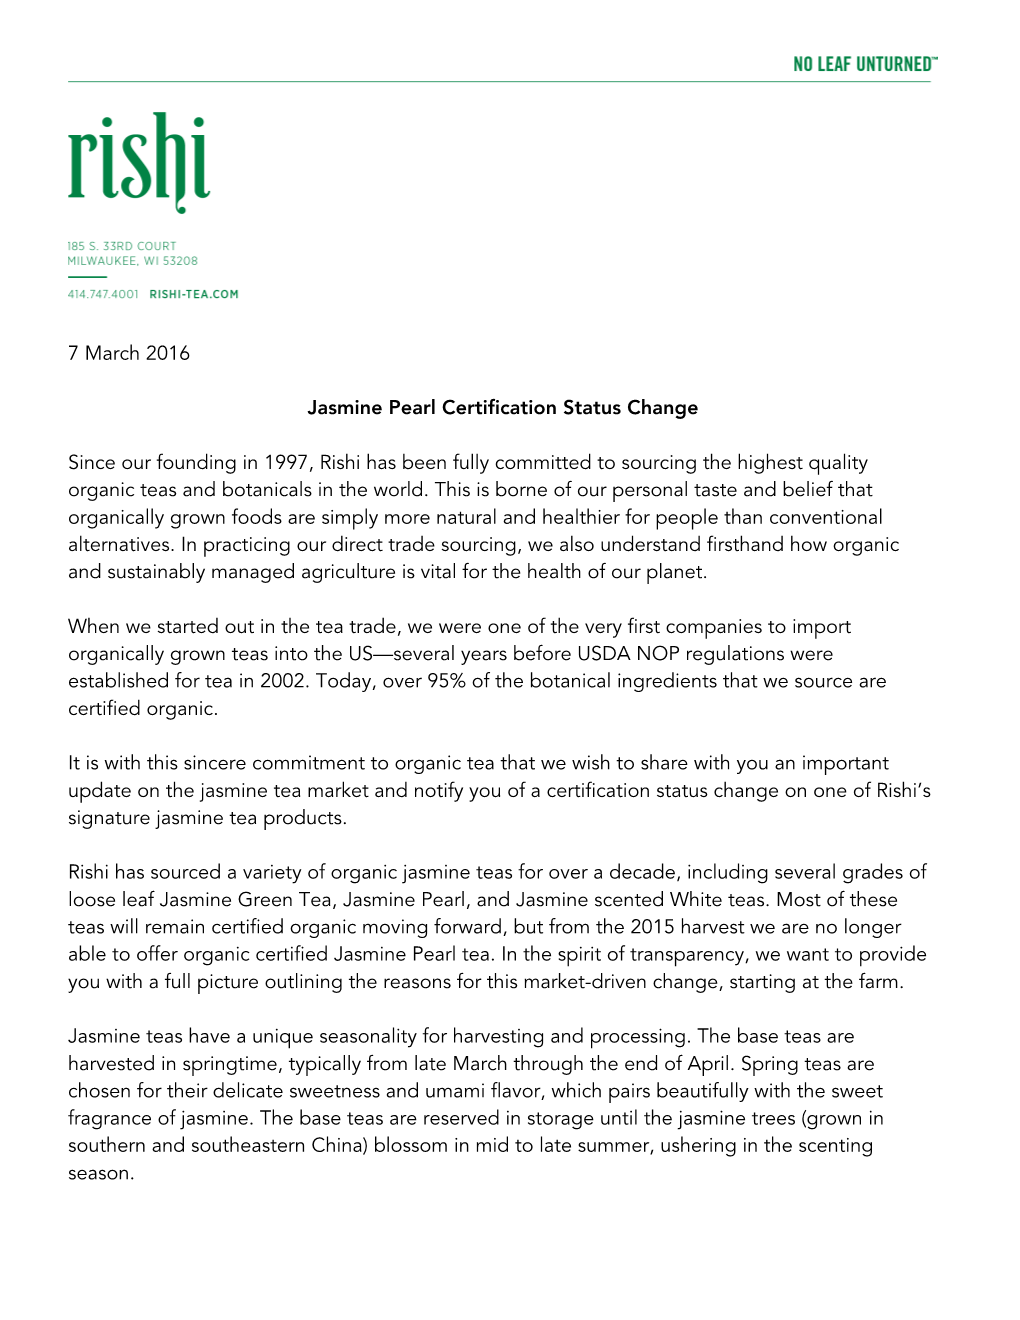 Rishi Jasmine Pearl Certification Status Change